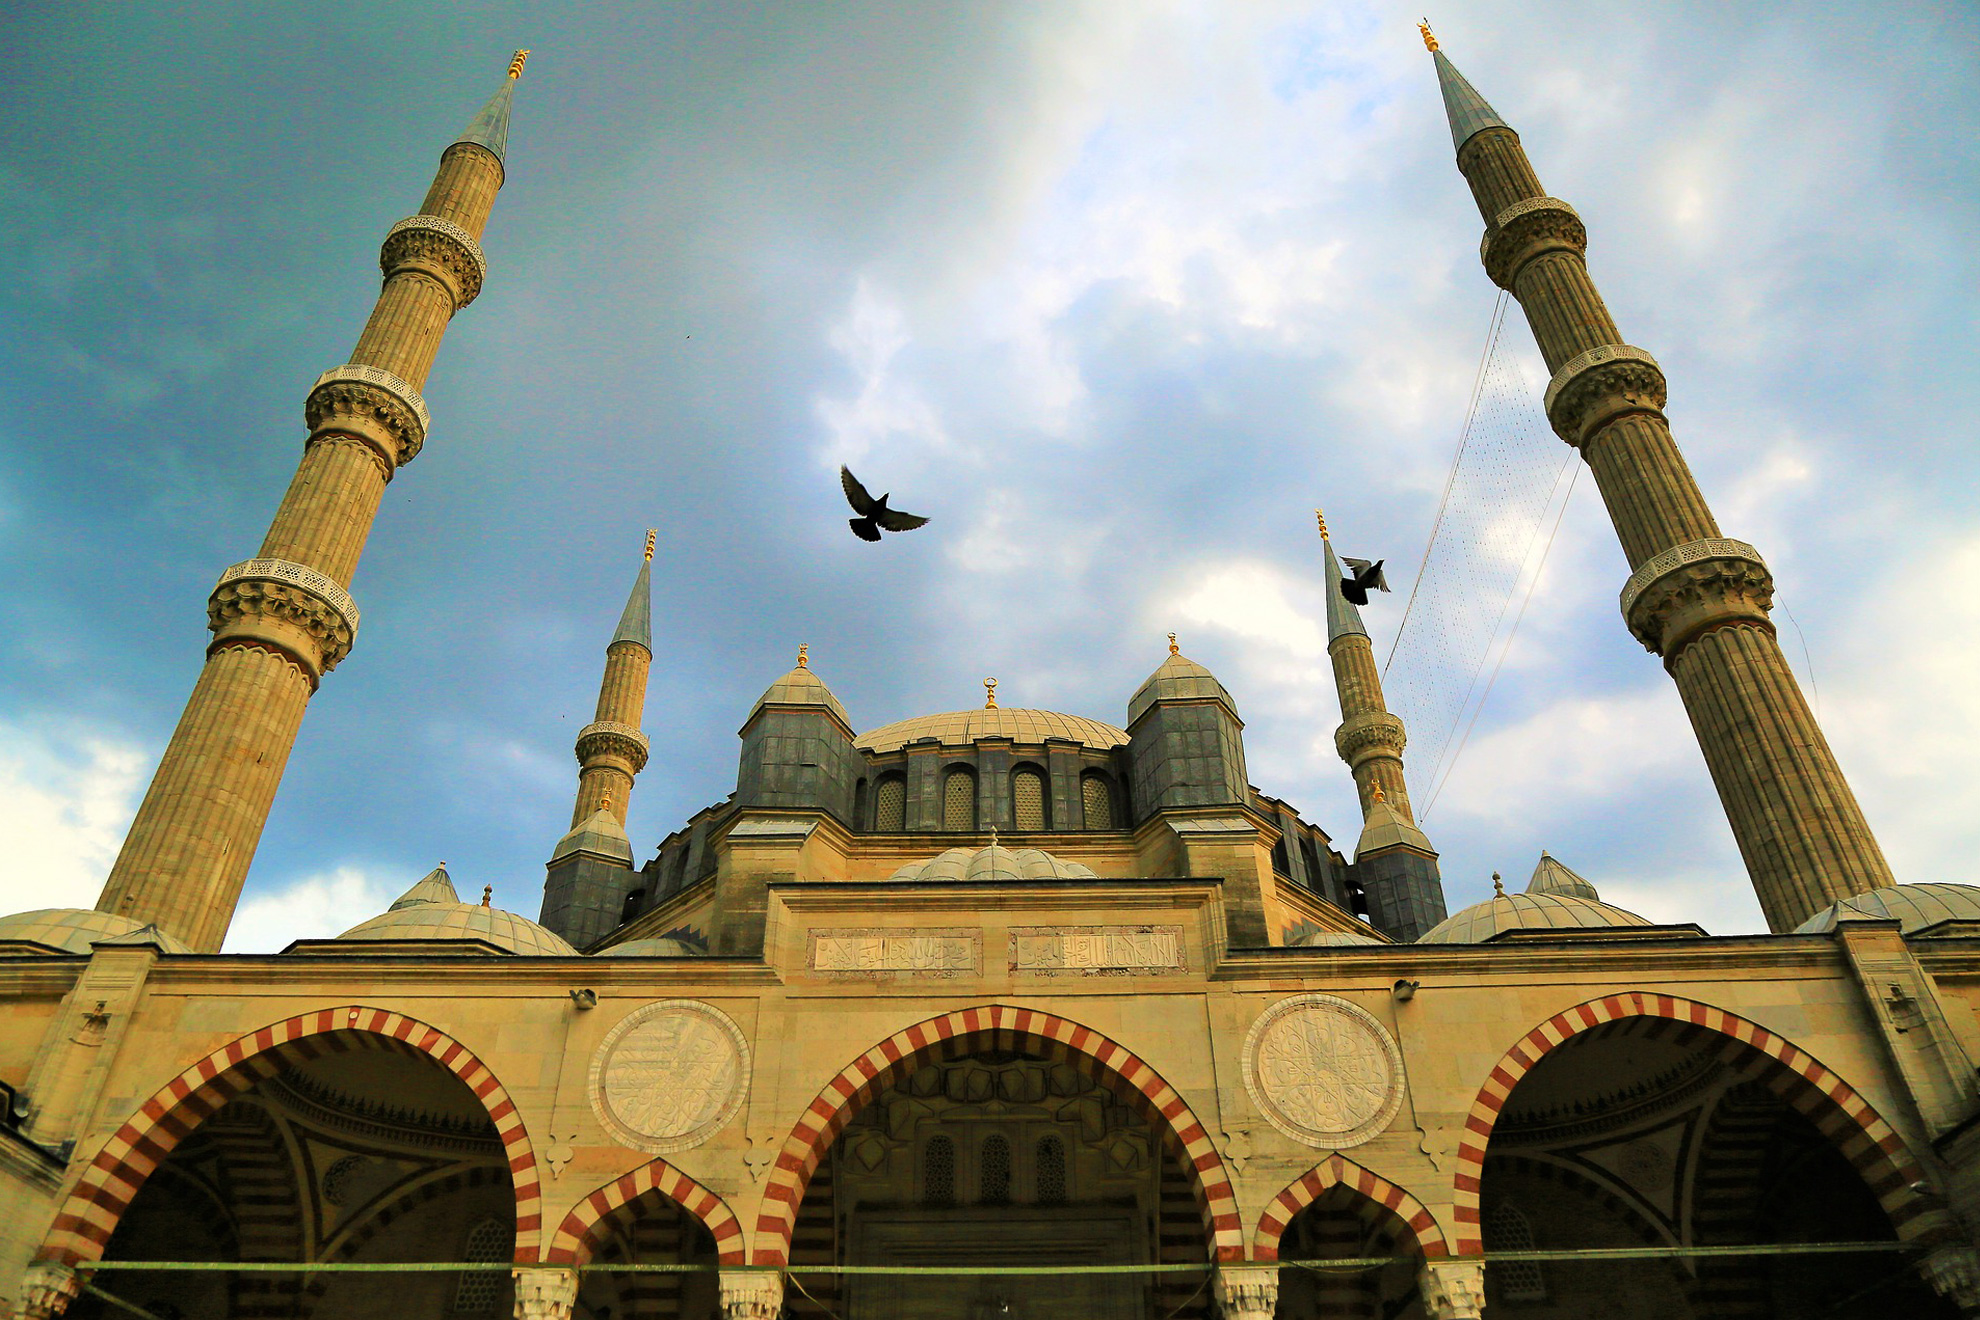 Шопинг уикенд в Одрин - Джамията &bdquo;Селимиe&ldquo; (Селим джамия или Селимийе джамия), Одрин, Турция - The Selimiye Mosque, Edirne, Turkey